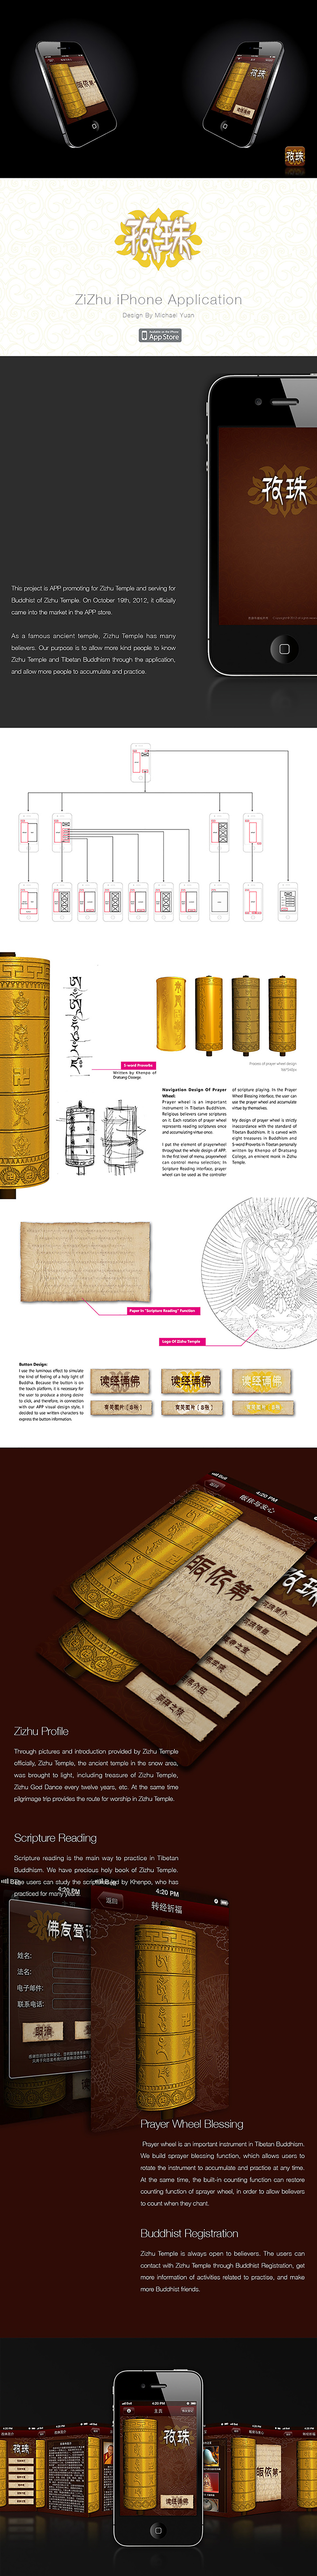 budda tibet interactive design user experience ux UI digital media app store skeuomorphism Skeuomorph religion